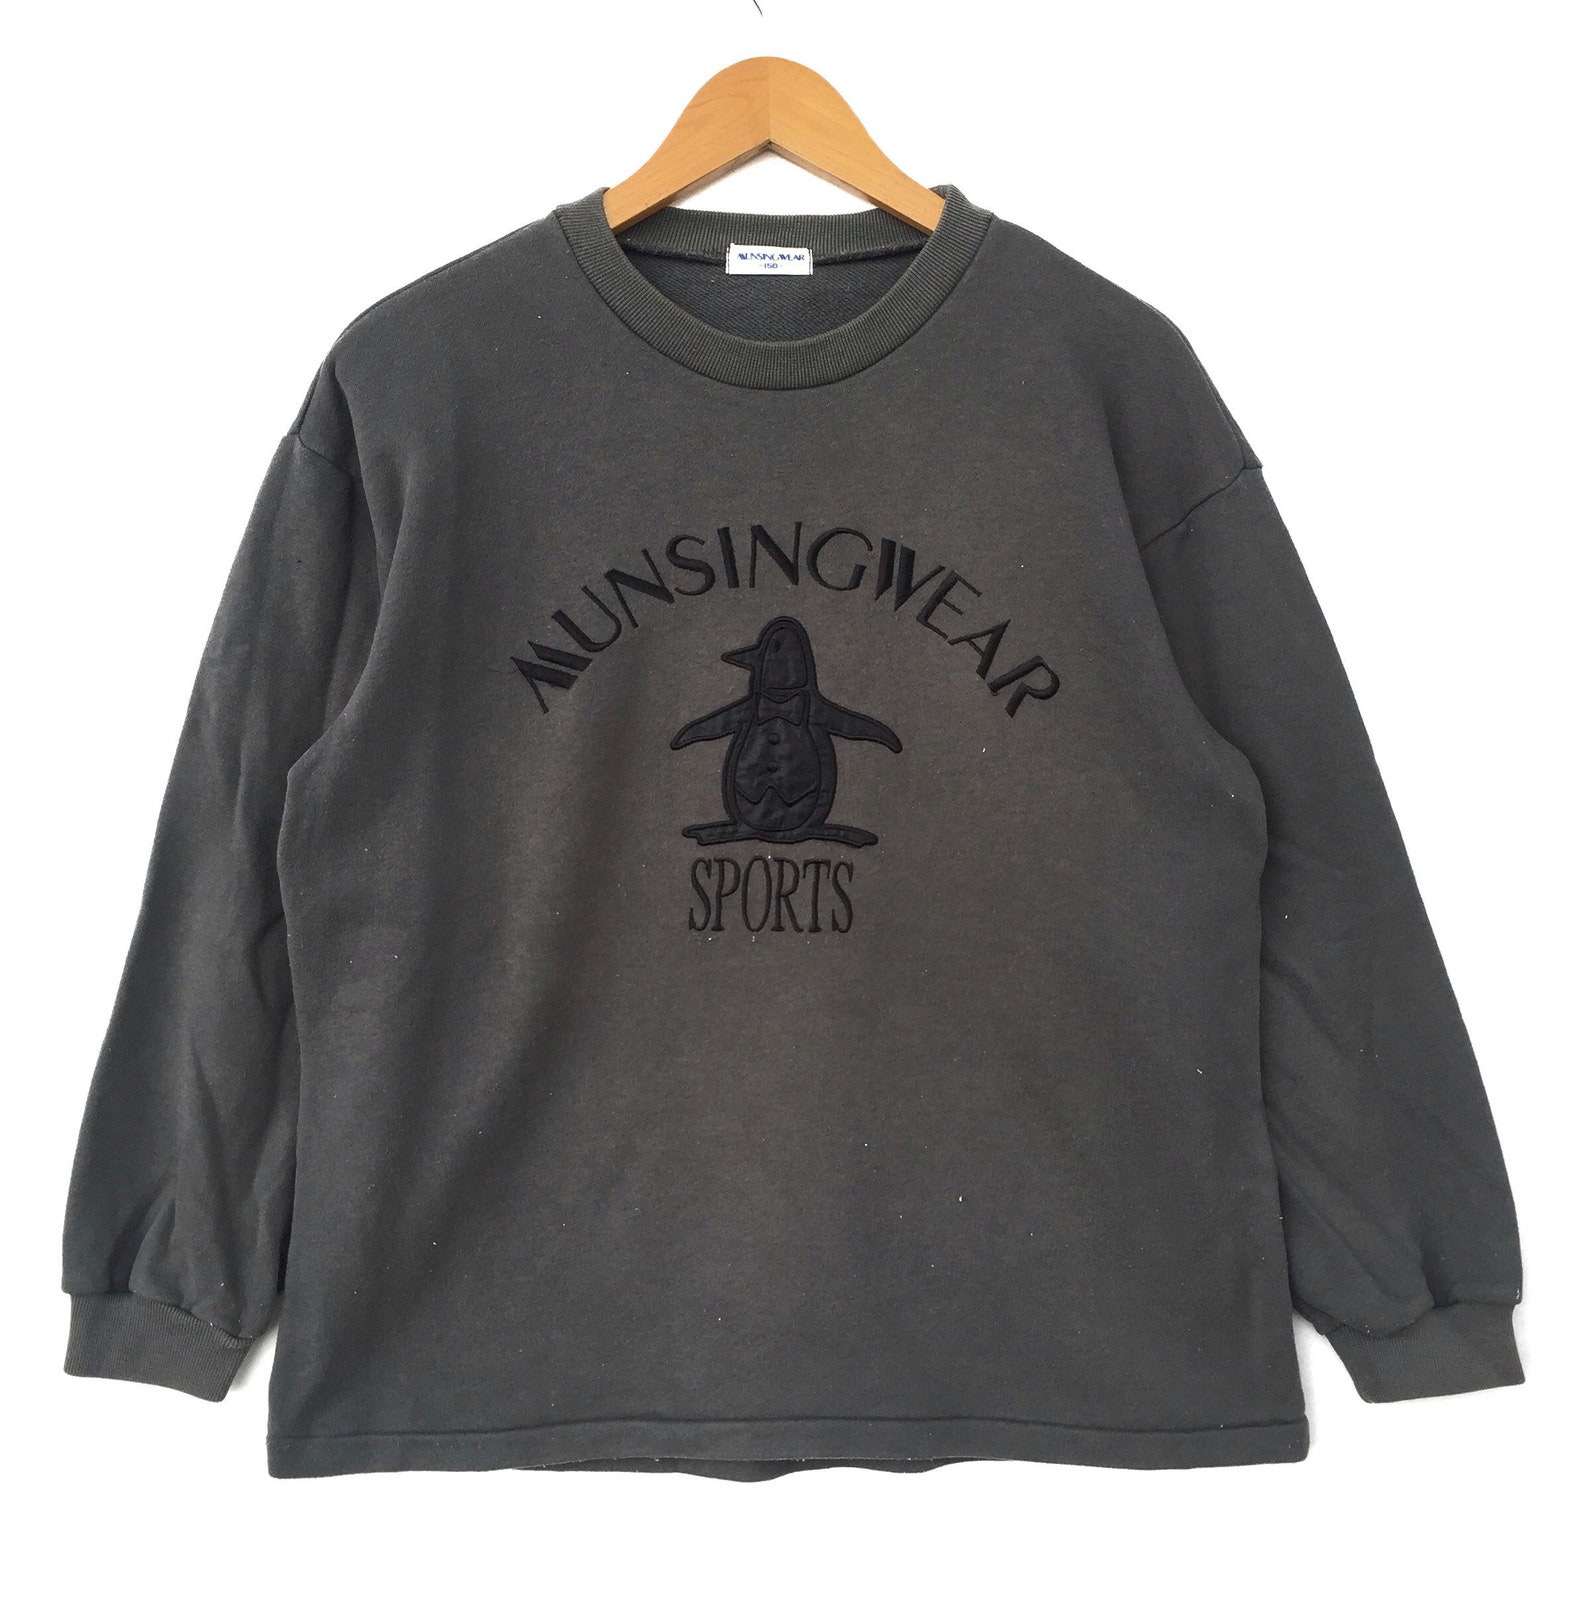 Munsing Wear sweatshirt Big Logo Embroidery Vintage 90s grey | Etsy